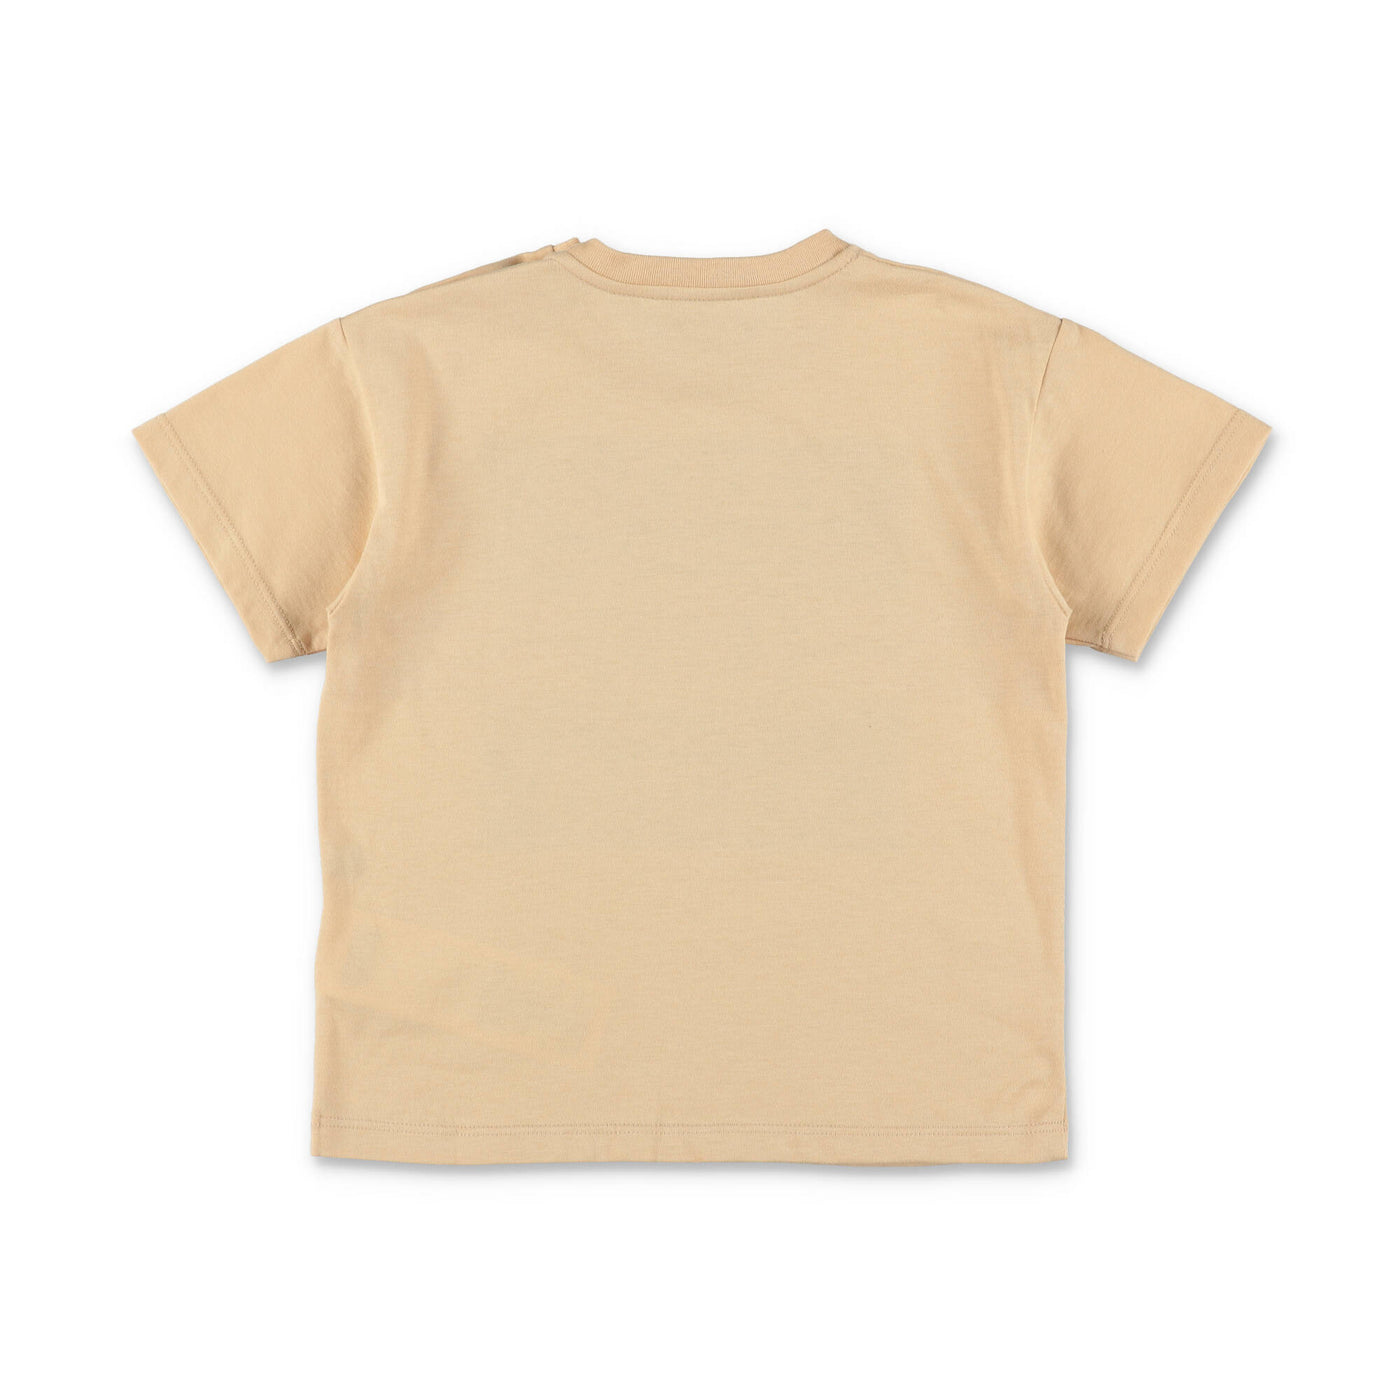 Cream cotton jersey baby boy GUCCI t-shirt